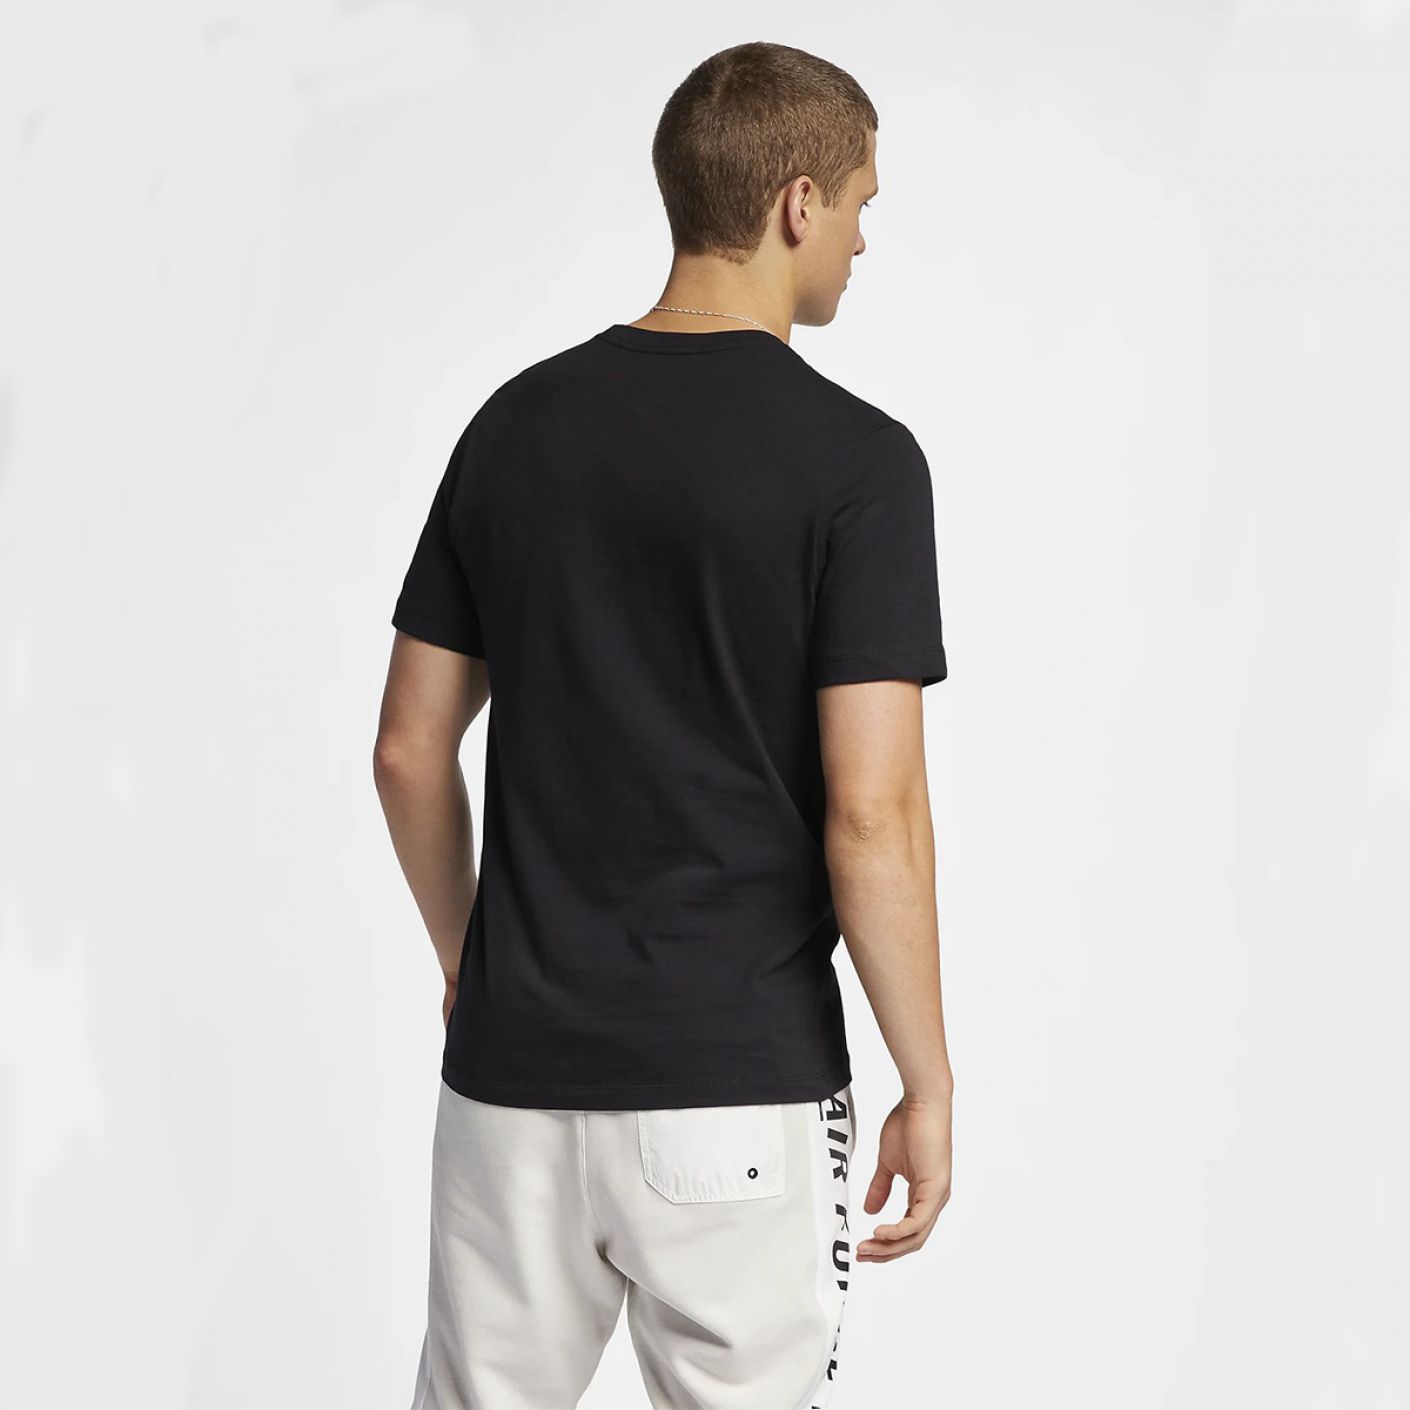 Nike Sportswear Black T-Shirt